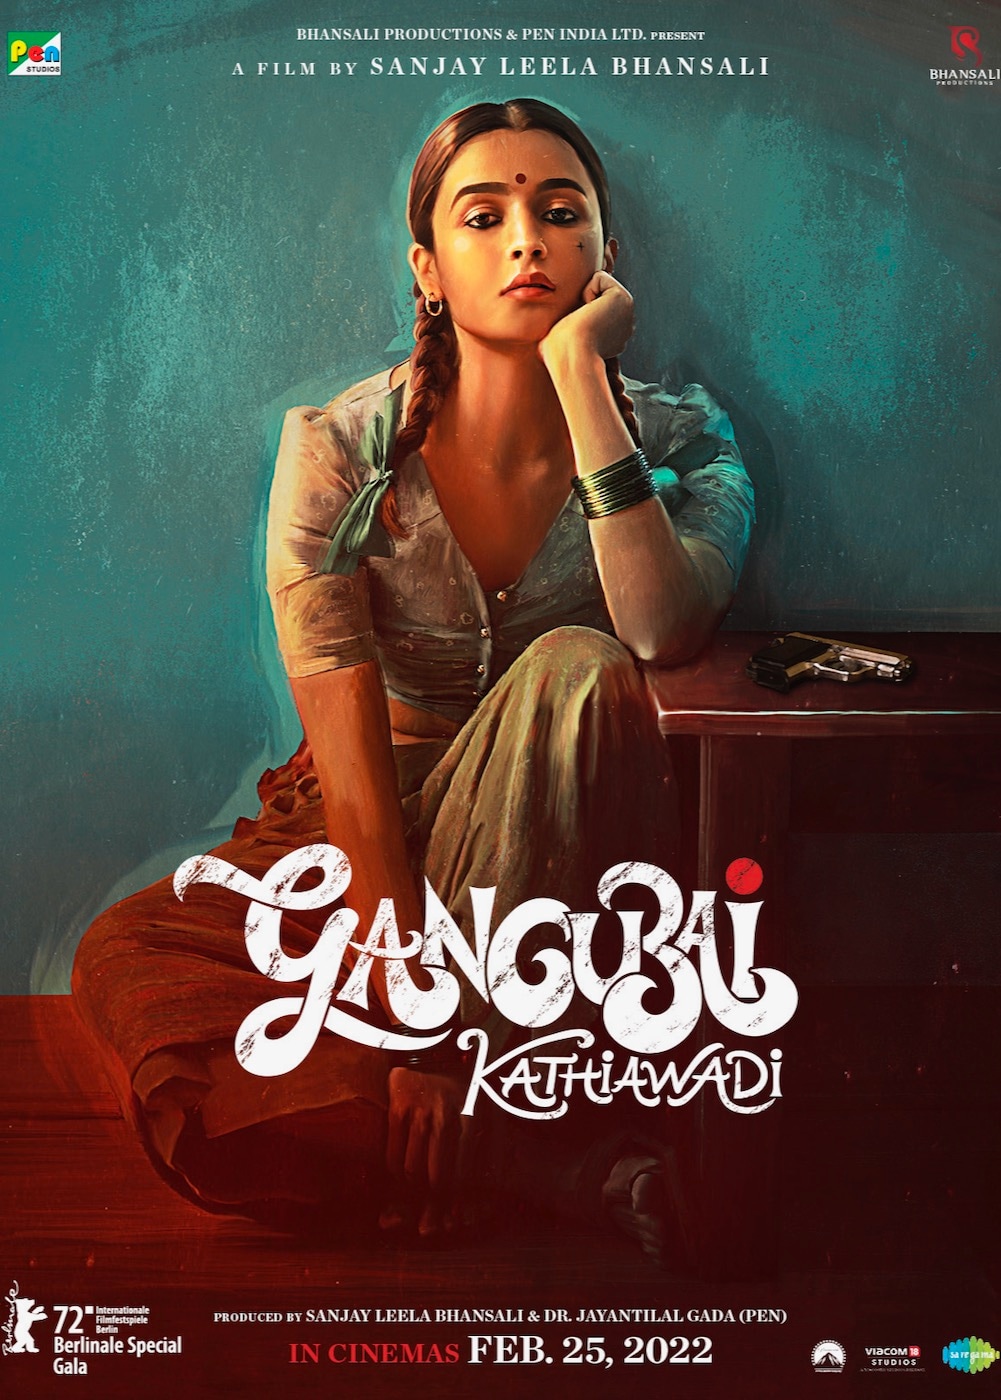 Gangubai kathiawadi full movie download filmyzilla fb lite 10 apk download